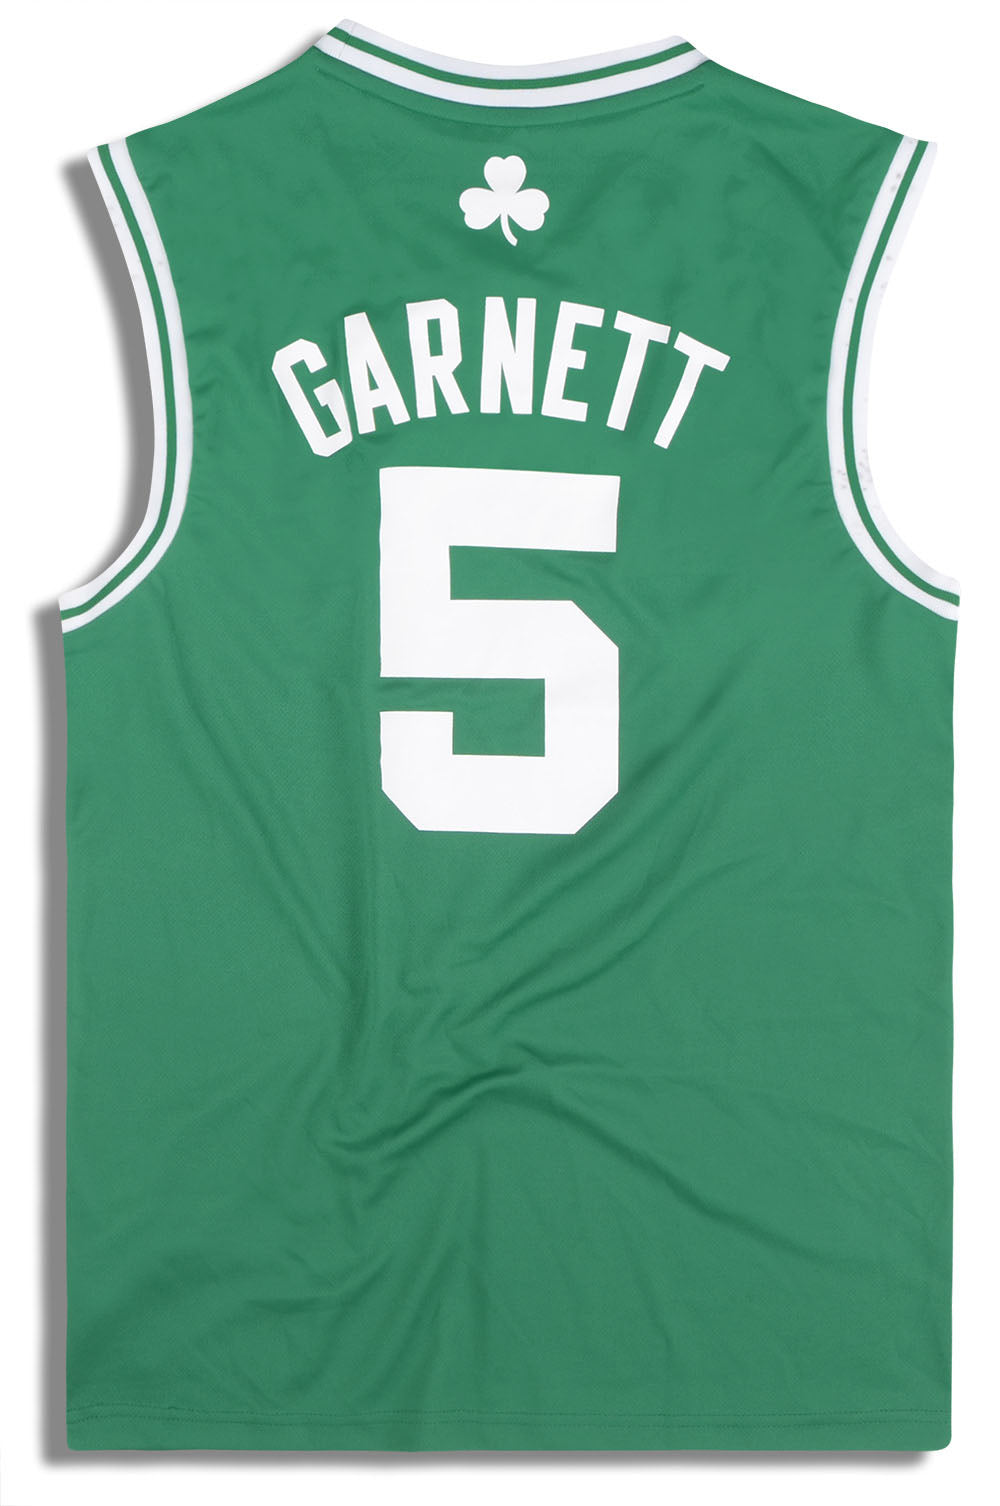 NBA Boston Celtics Kevin Garnett #5 Jersey Adidas Shirt Basketball